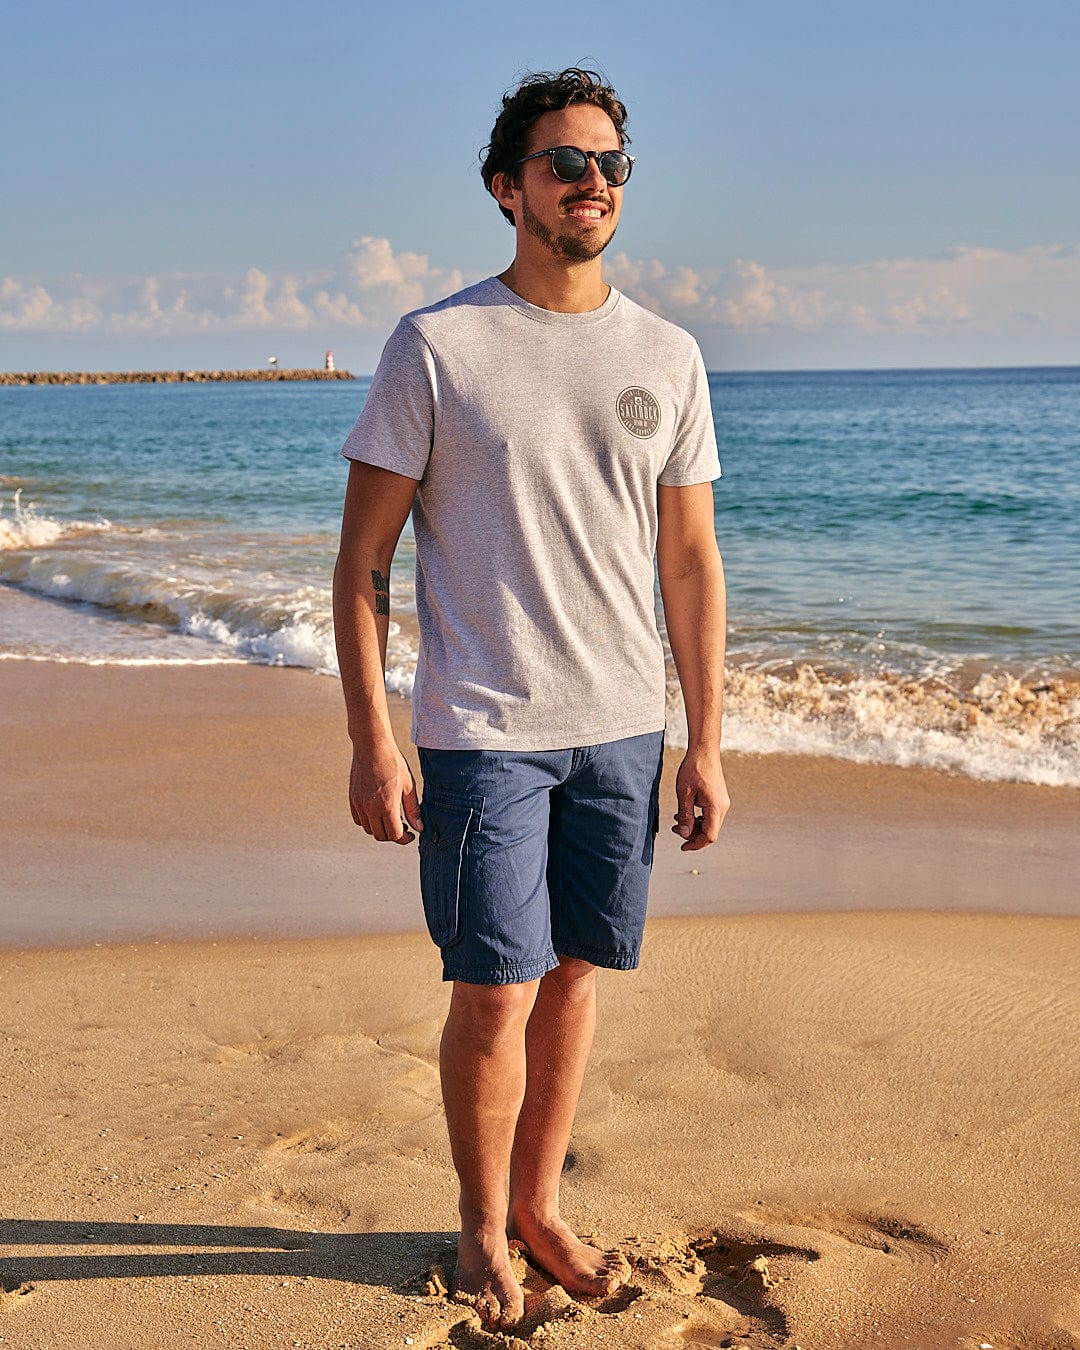 A man standing on a beach wearing the All Terrain - Mens Short Sleeve T-Shirt - Grey by Saltrock.